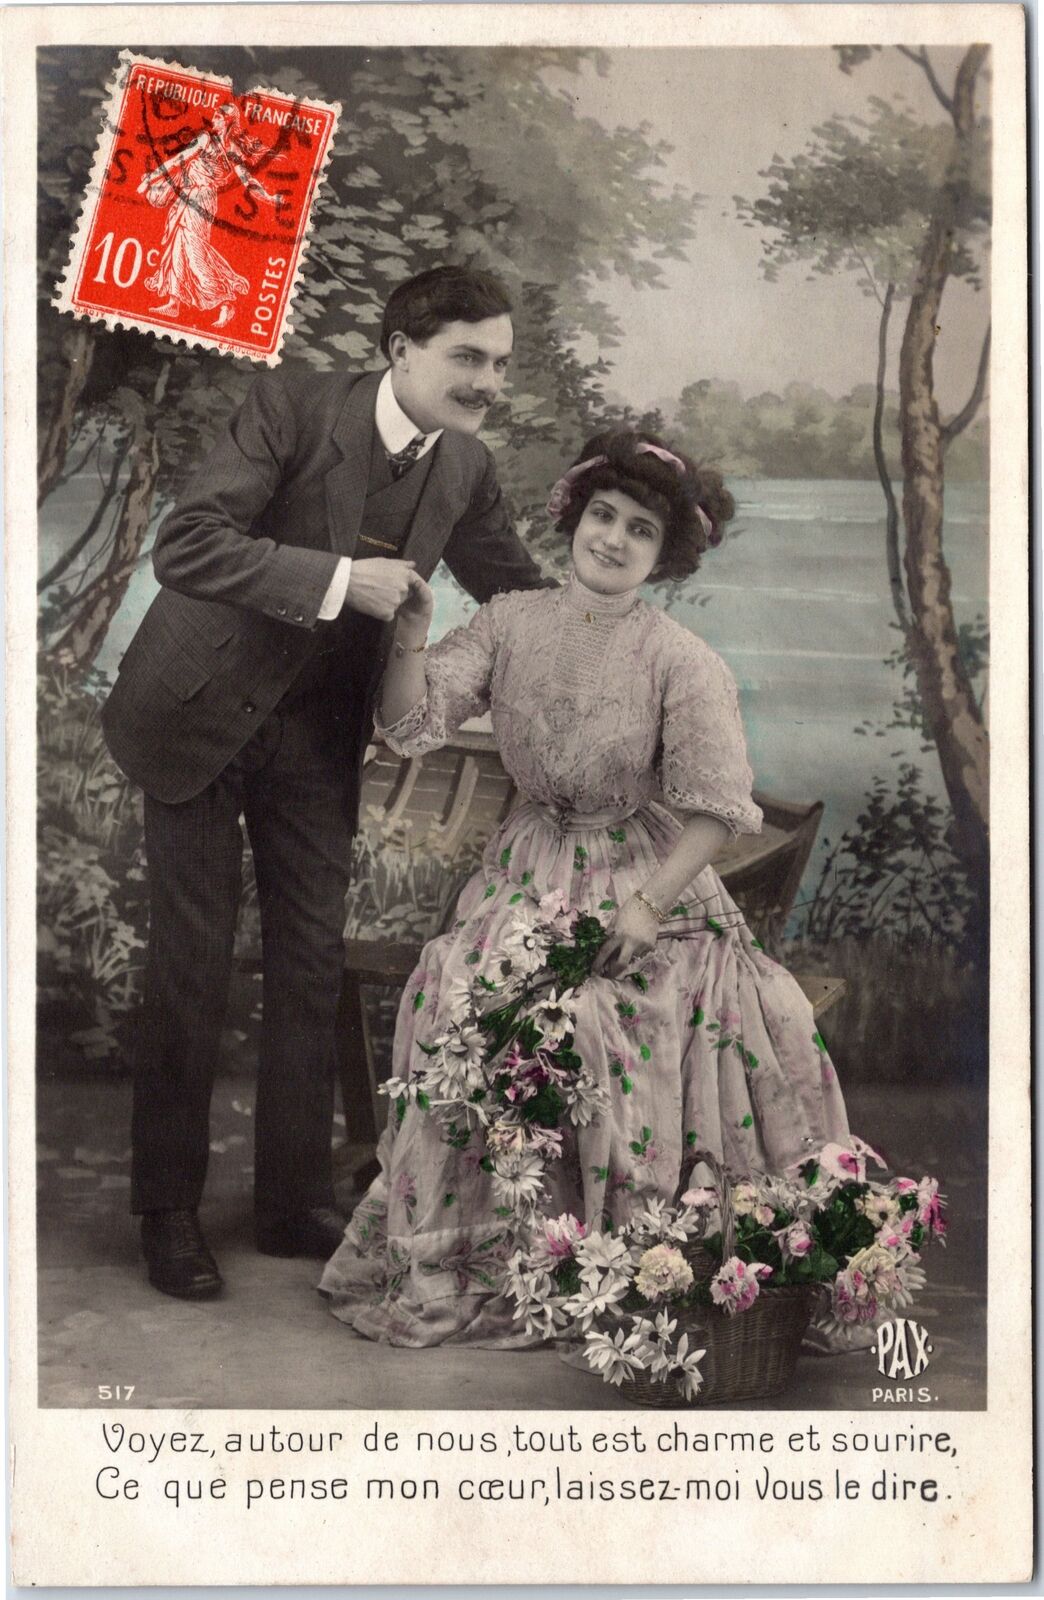 VINTAGE POSTCARD ROMANTIC SCENE COUPLE ON STUDIO SETTING EUROPE c. 1905-10 RPPC